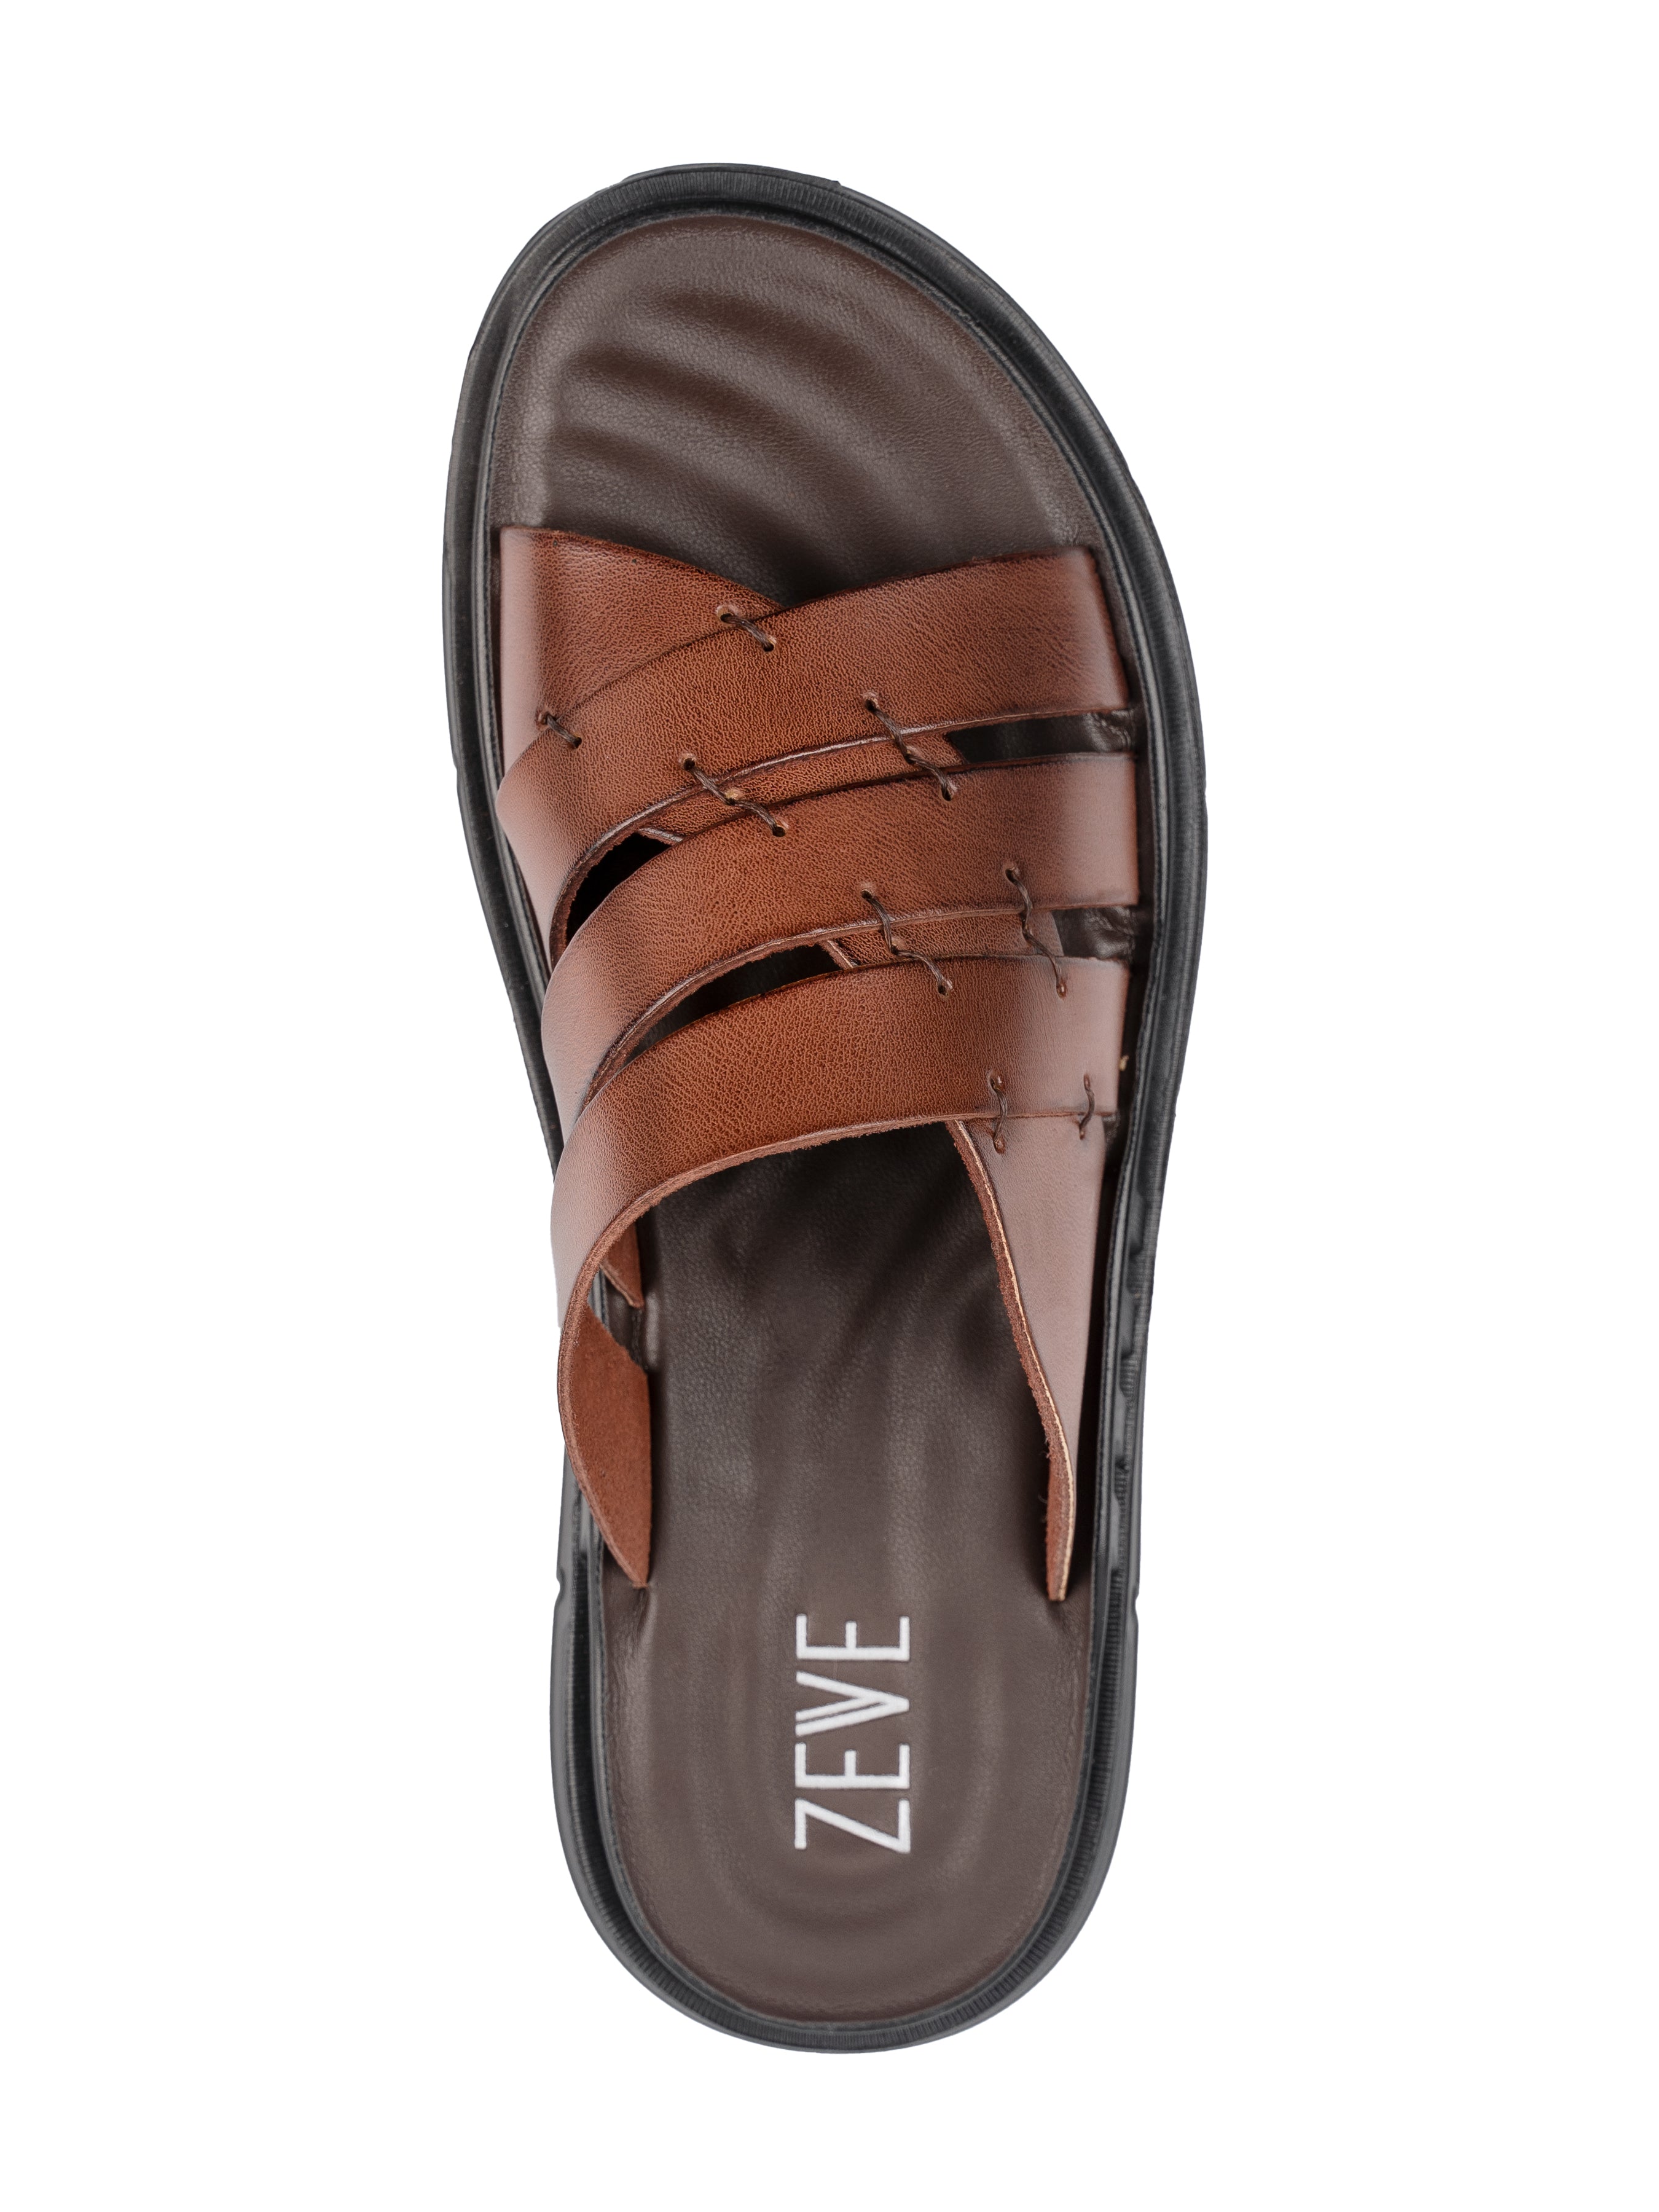 Hael Sandal - Coffee Leather